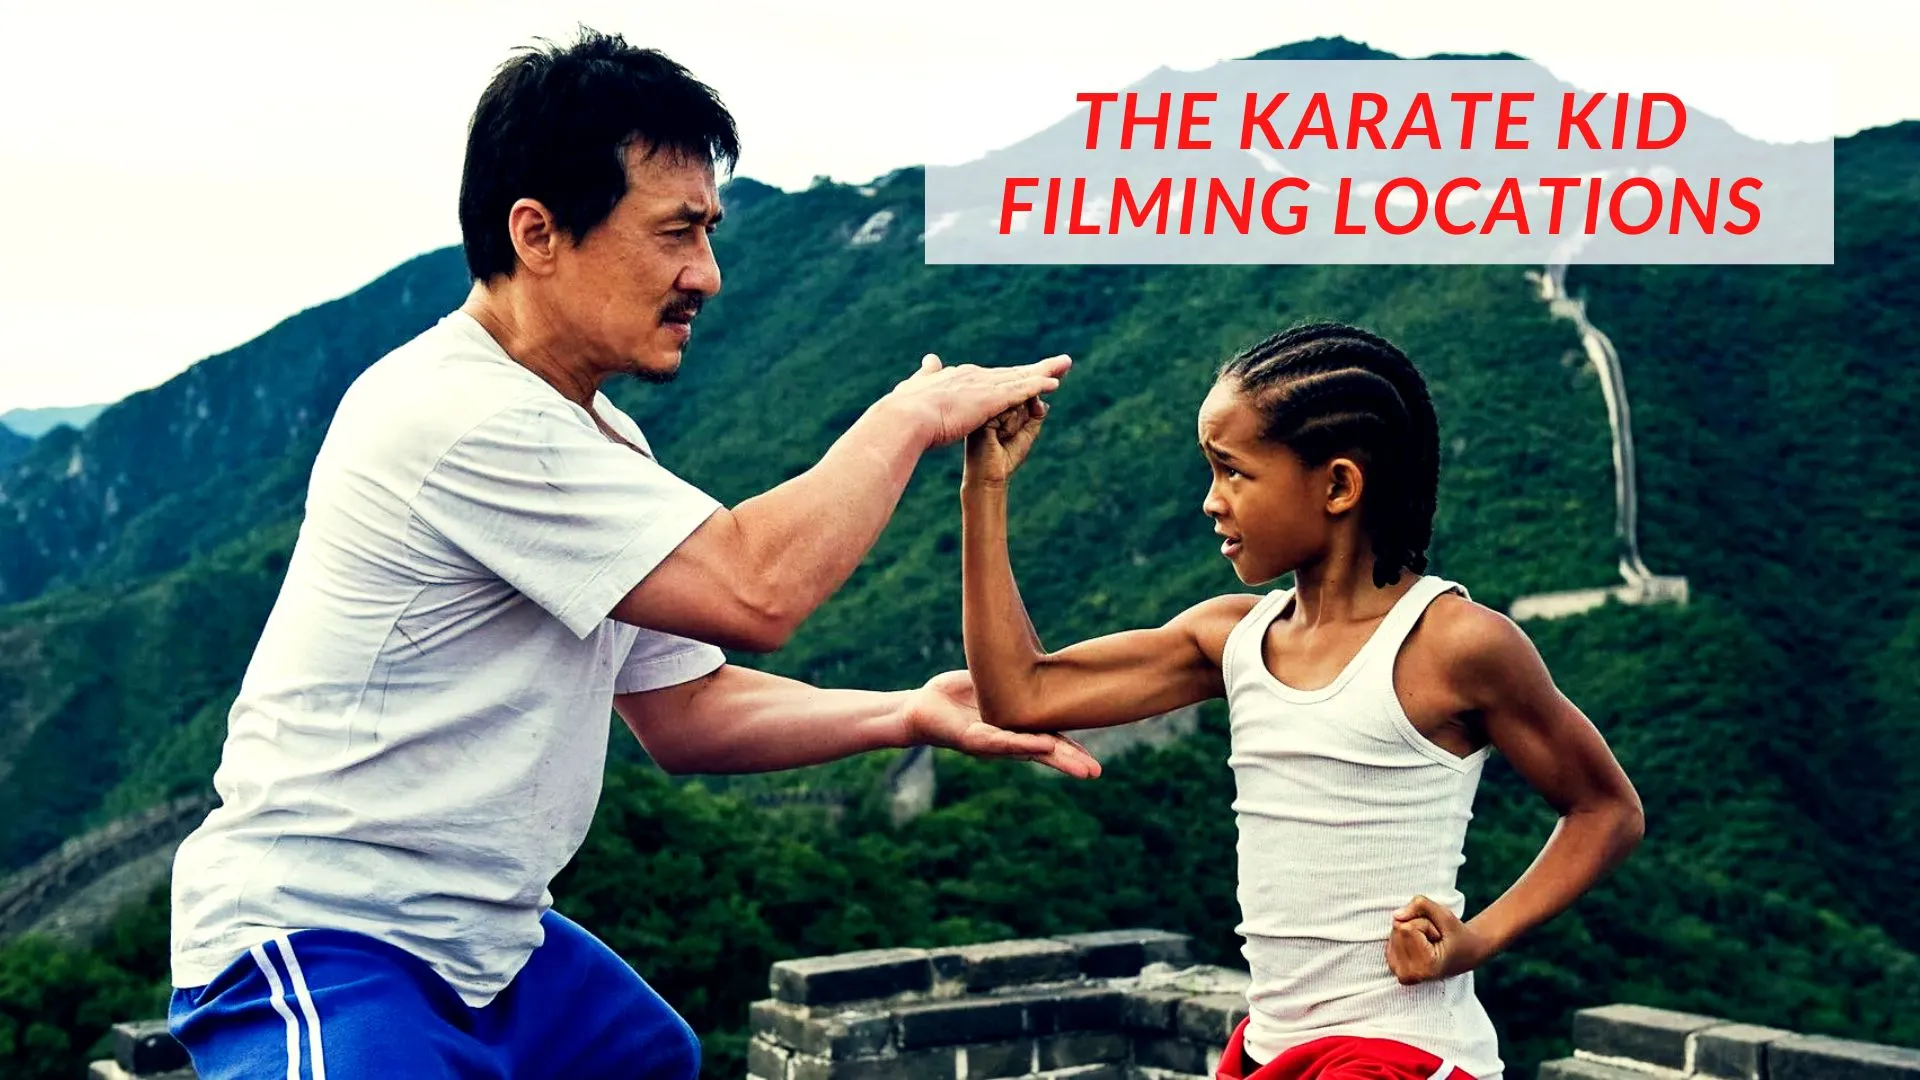 The Karate Kid Filming Locations